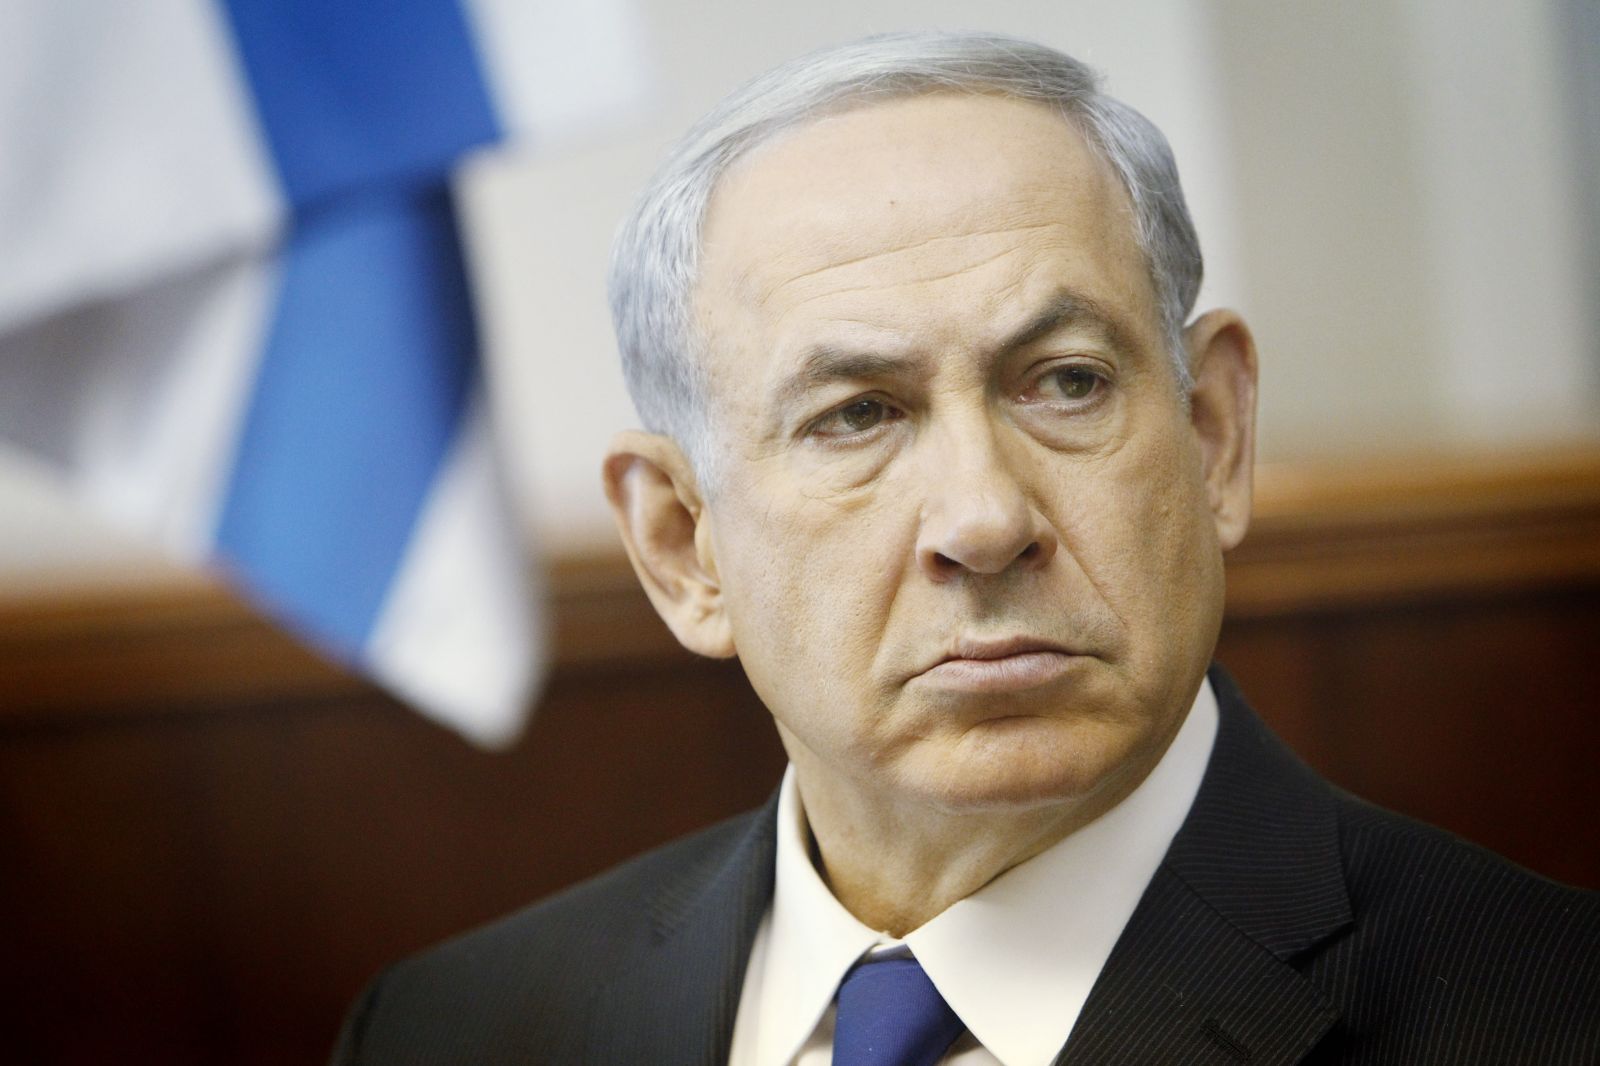 etanyahu warns Iran 'not to test Israel's resolve'